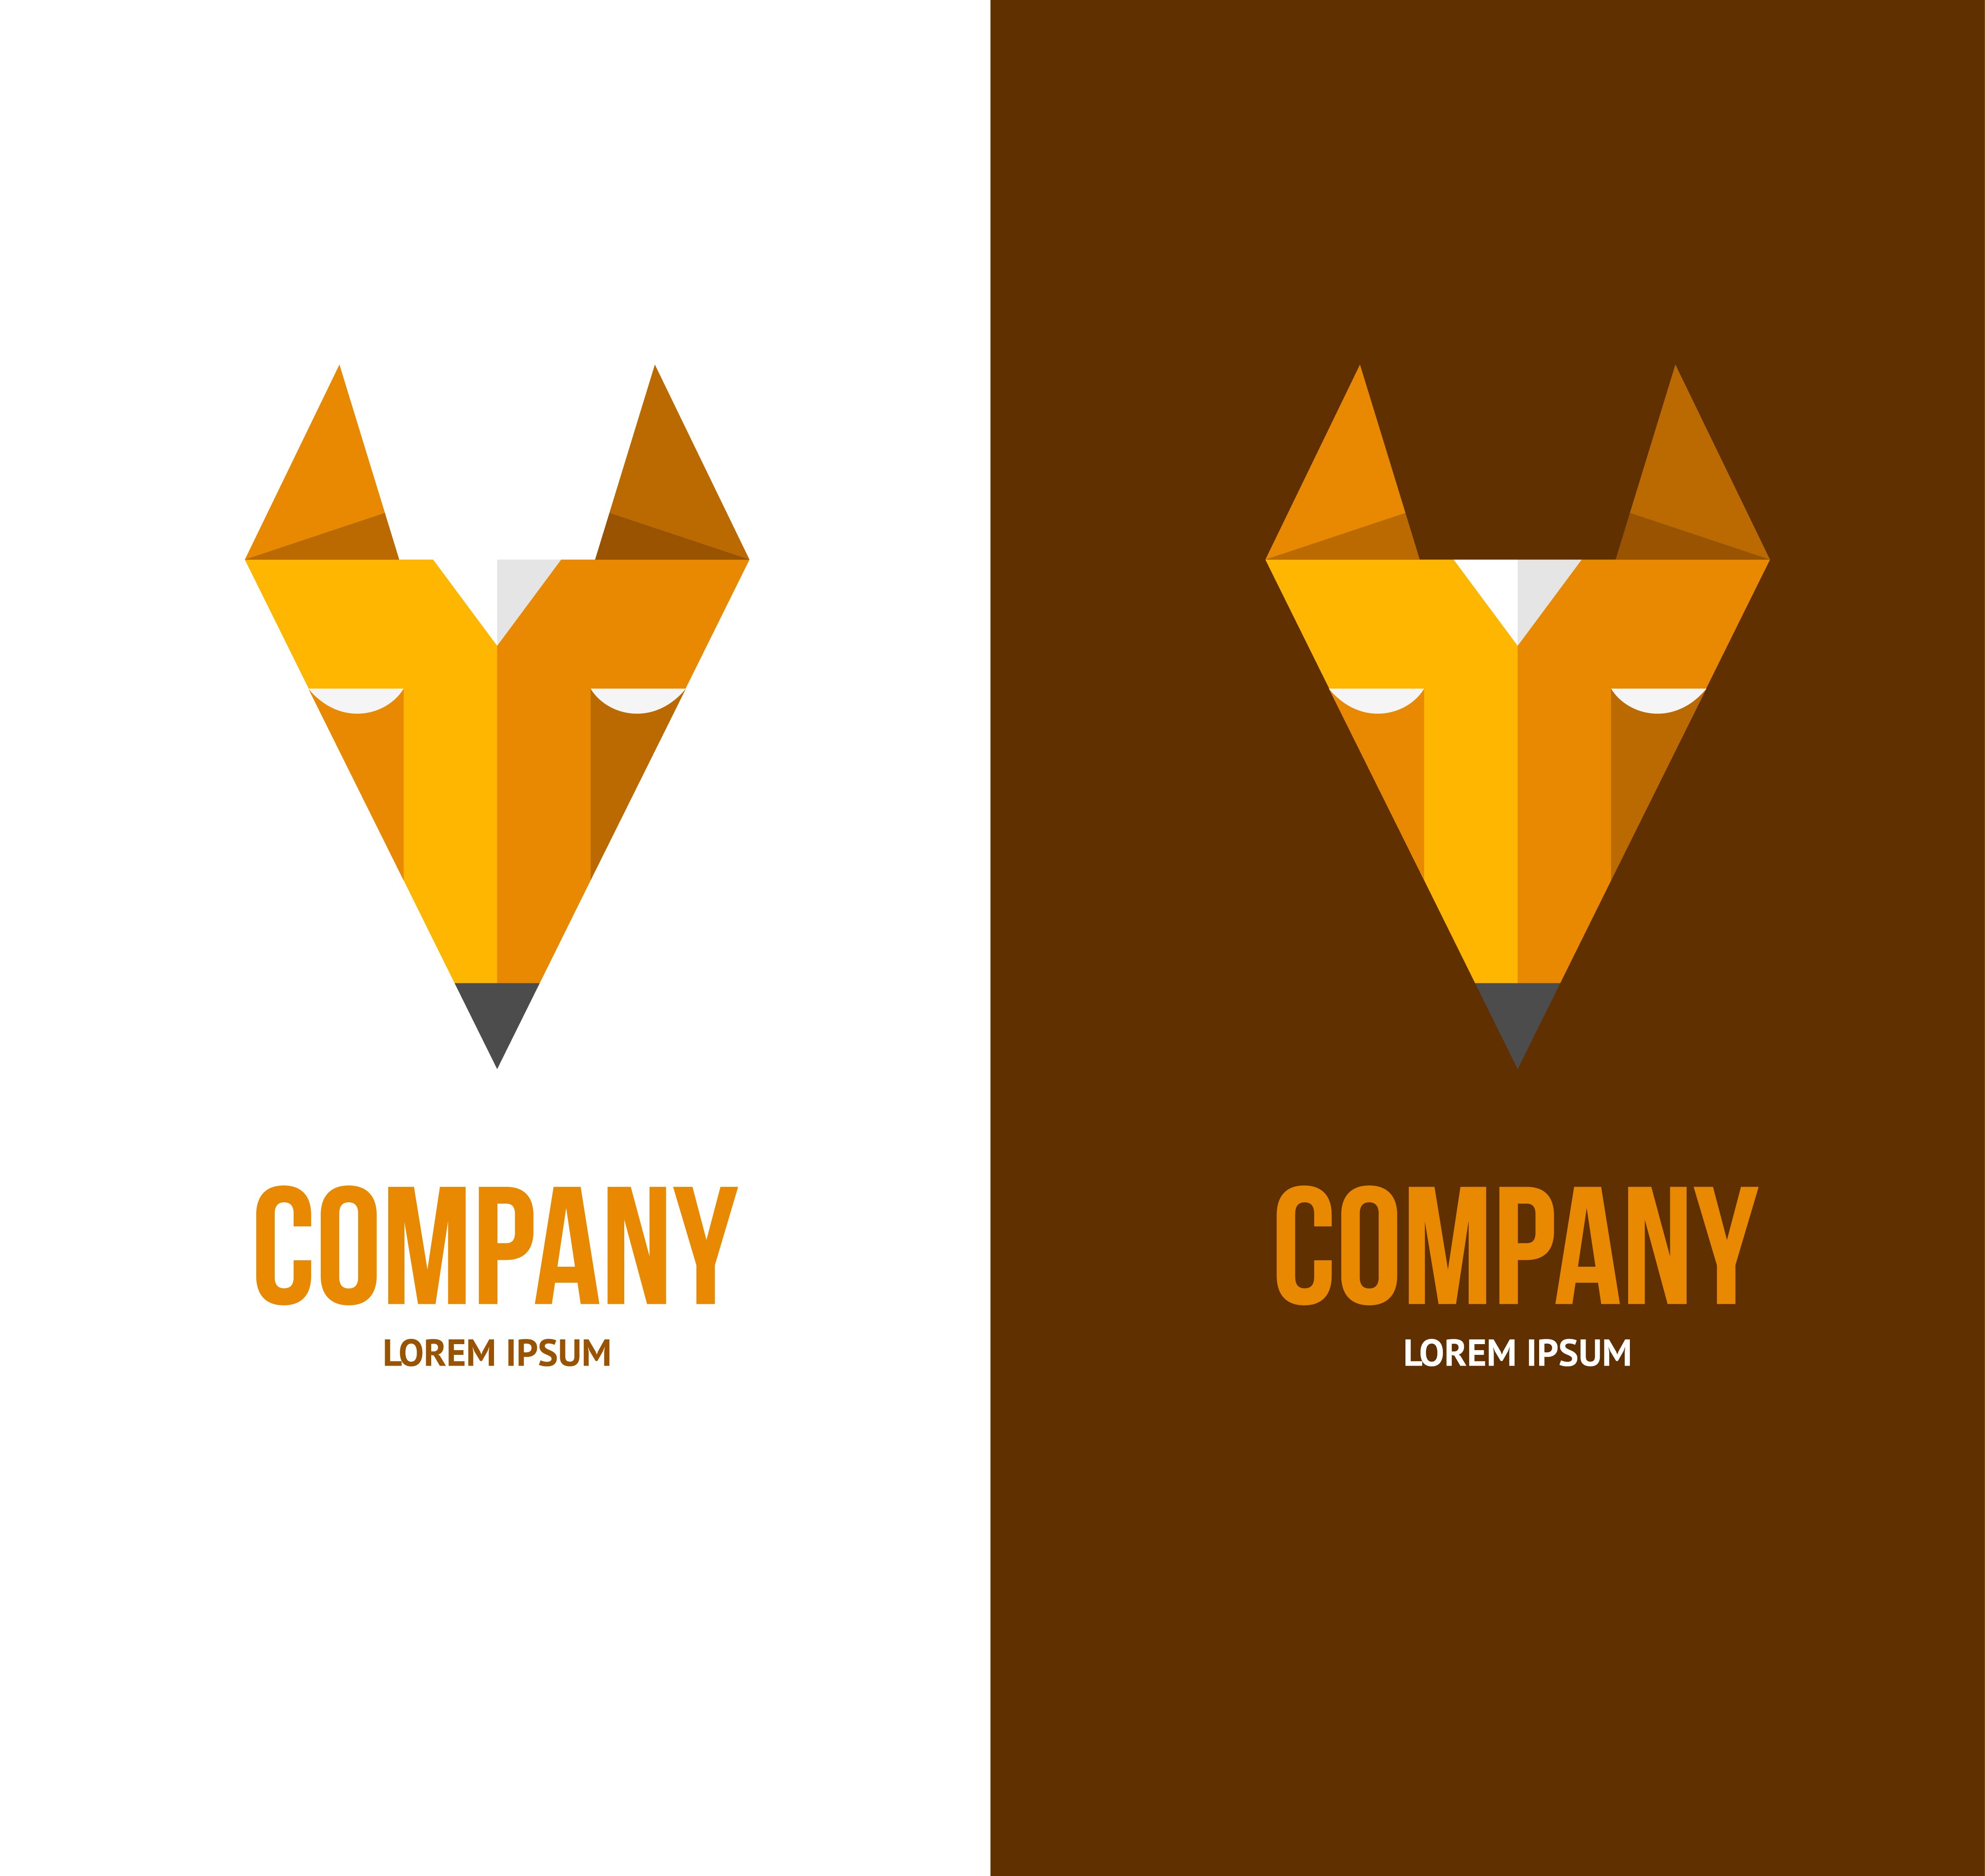 Triangle fox logo cover image.